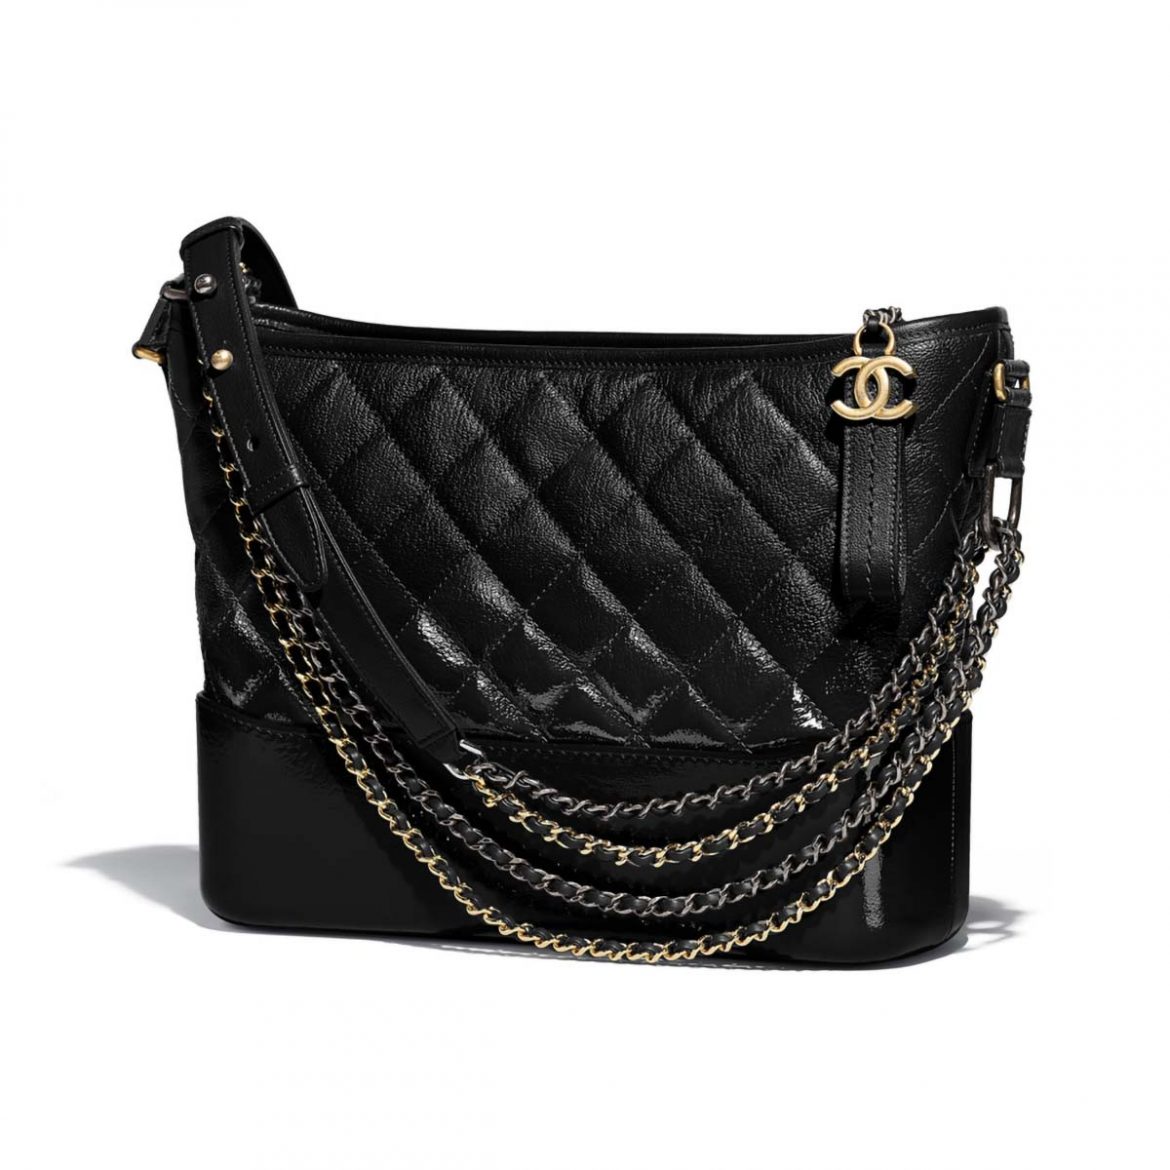 Chanel Gabrielle Hobo Medium Bag in Goatskin with Gold Silvertone